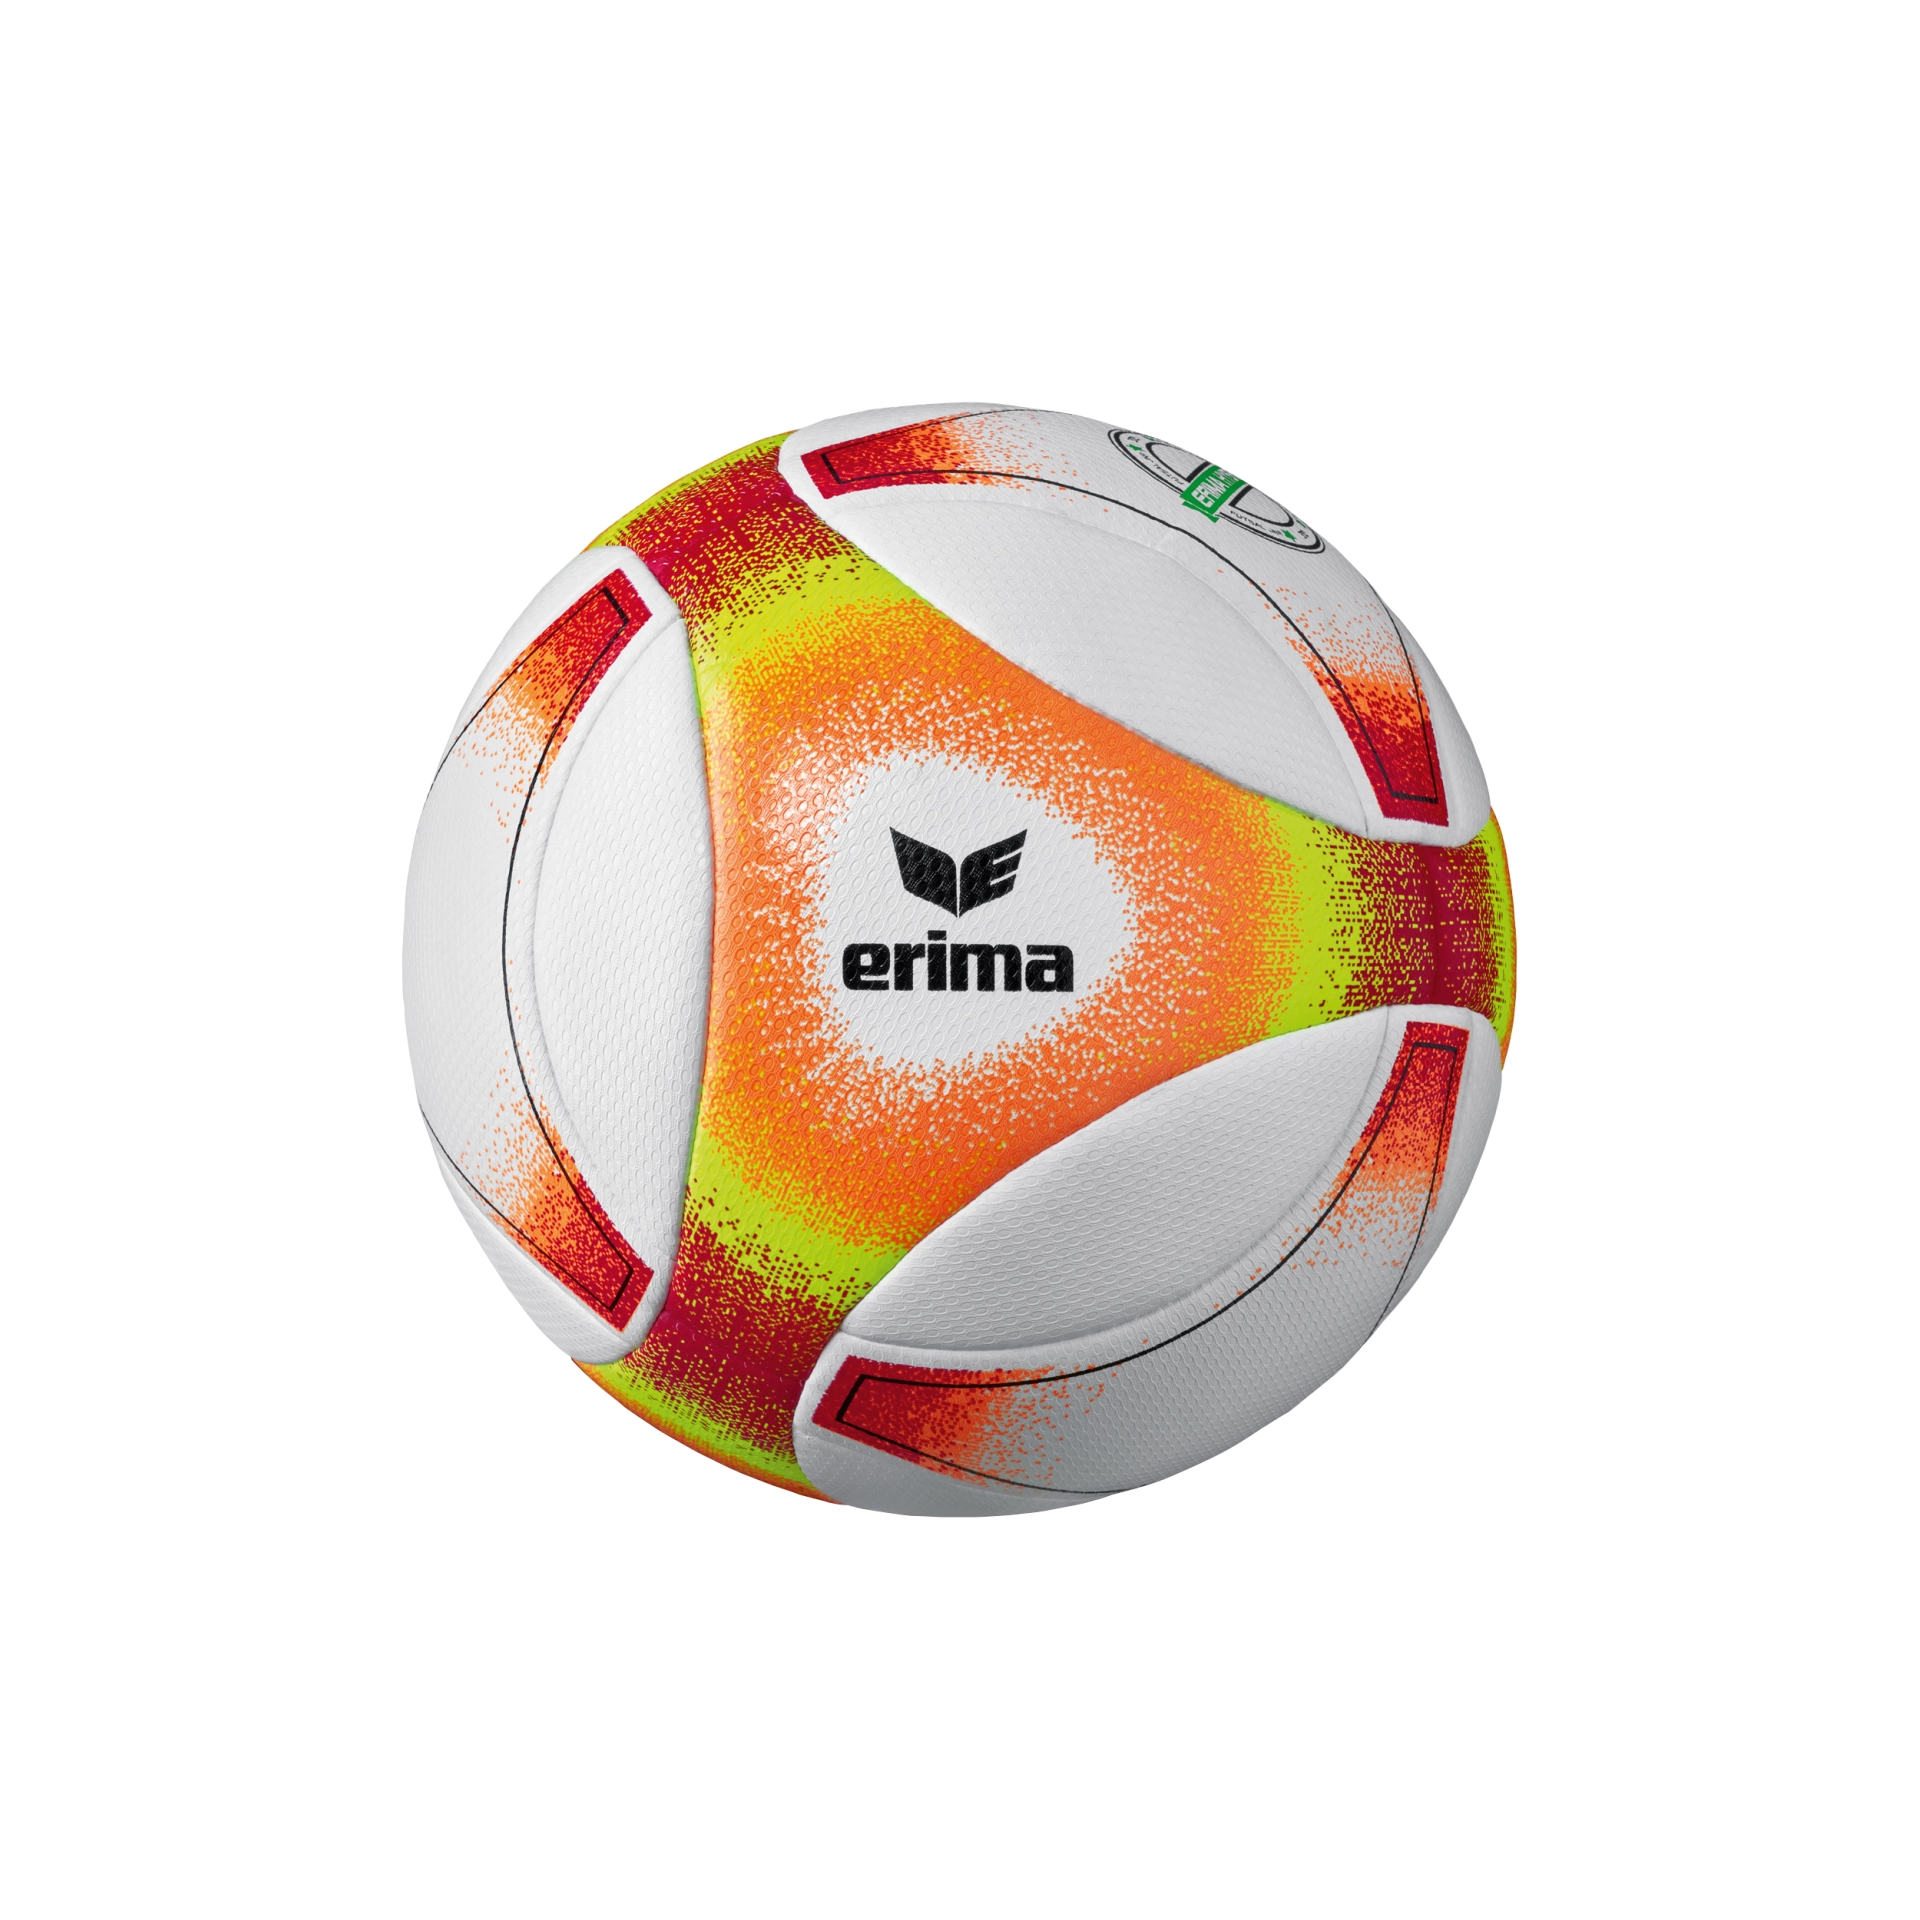 ERIMA Equipment___Fussbaelle_Hybrid_Futsal_JR_310_Gr4 7191915 214325 orange/safty yellow/red